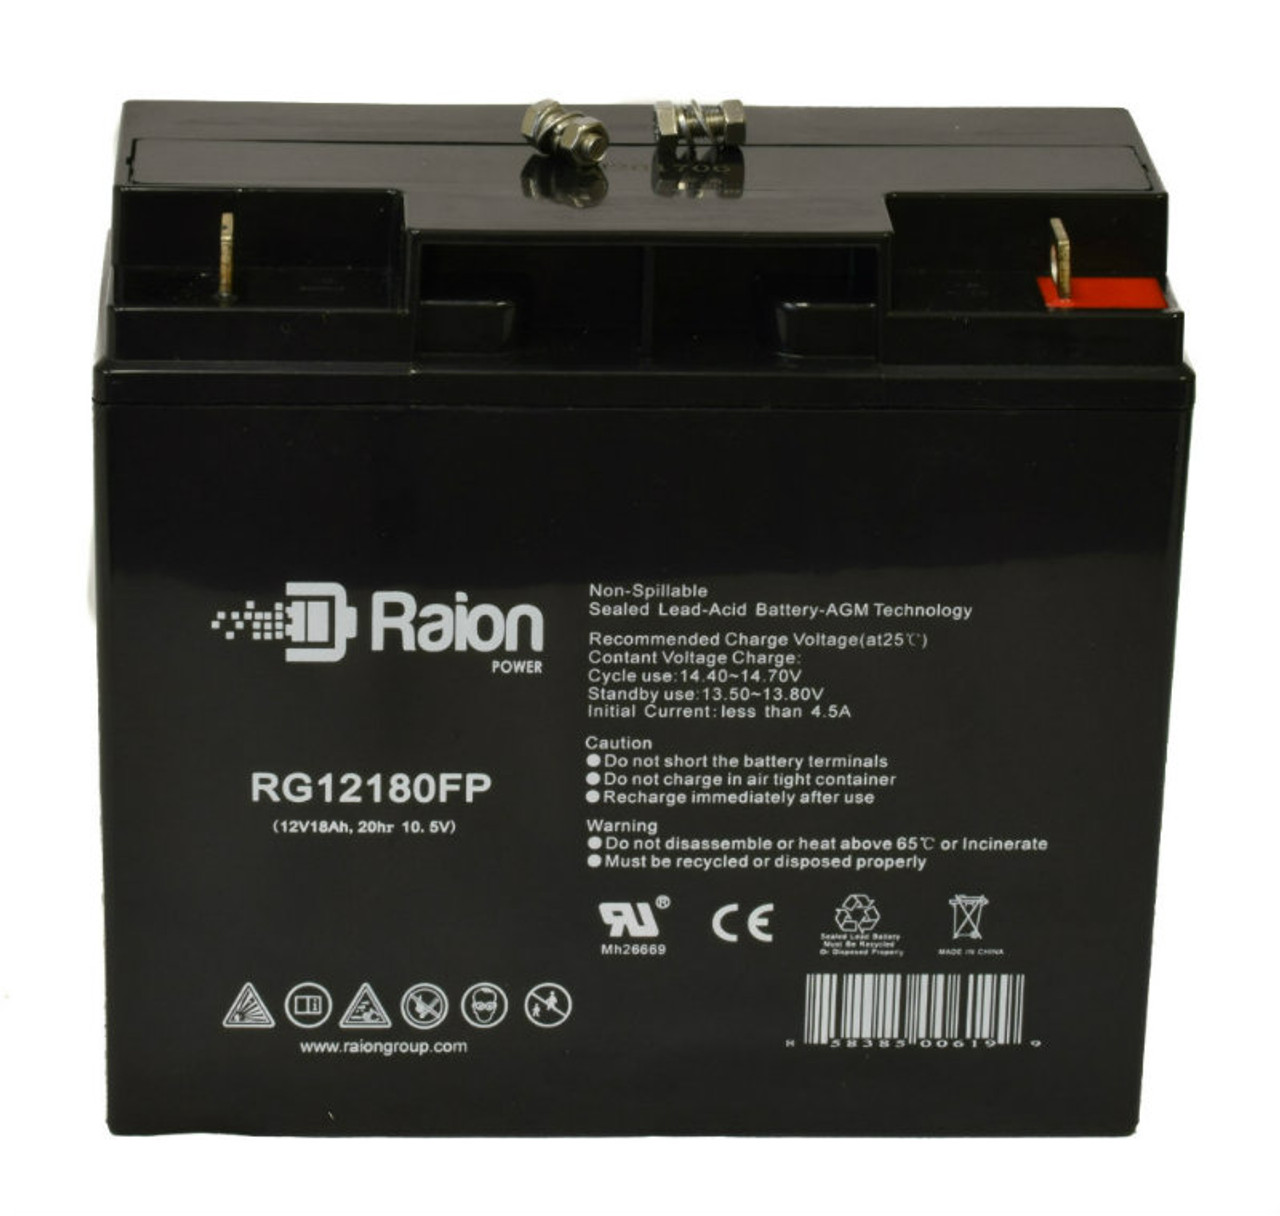 Raion Power RG12180FP 12V 18Ah Lead Acid Battery for Chiway SJ12V15Ah